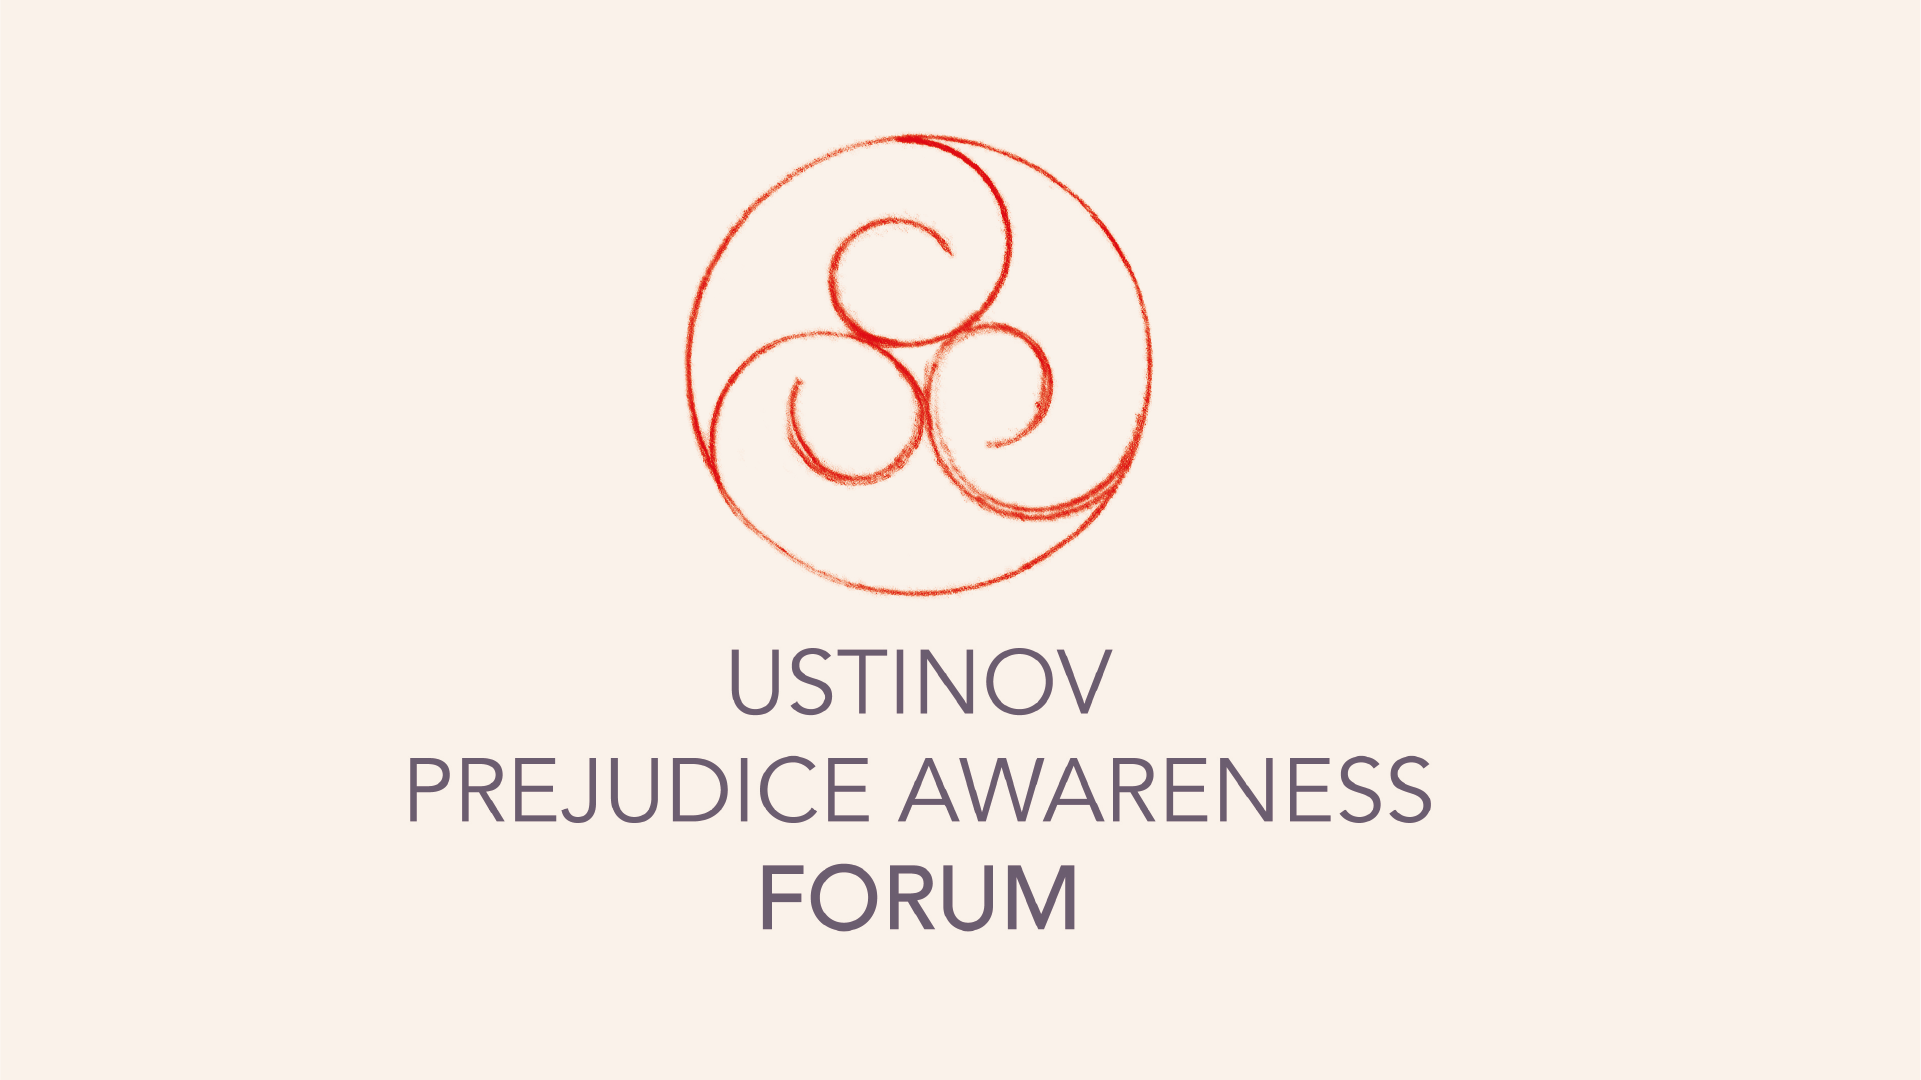 Ustinov Prejudice Awareness Forum